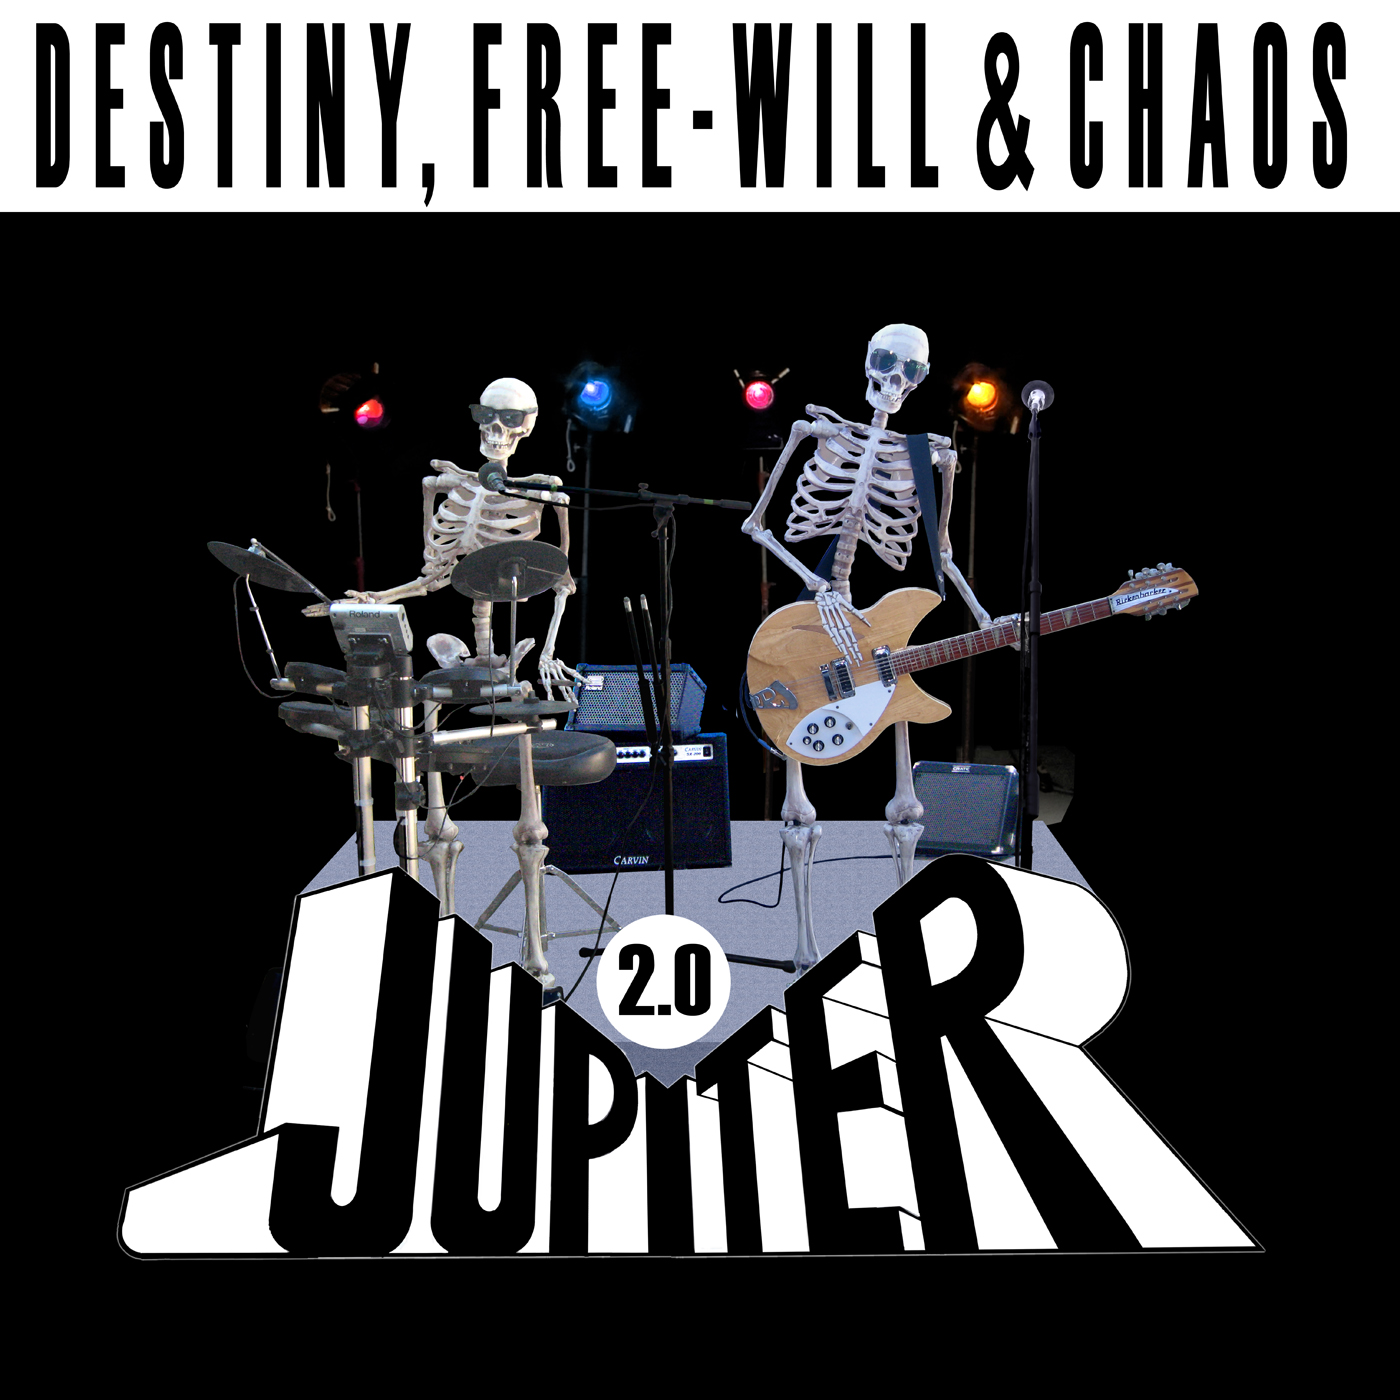 JUPITER 2.0 - Destiny, Free-Will & Chaos CD - Long Beach, California